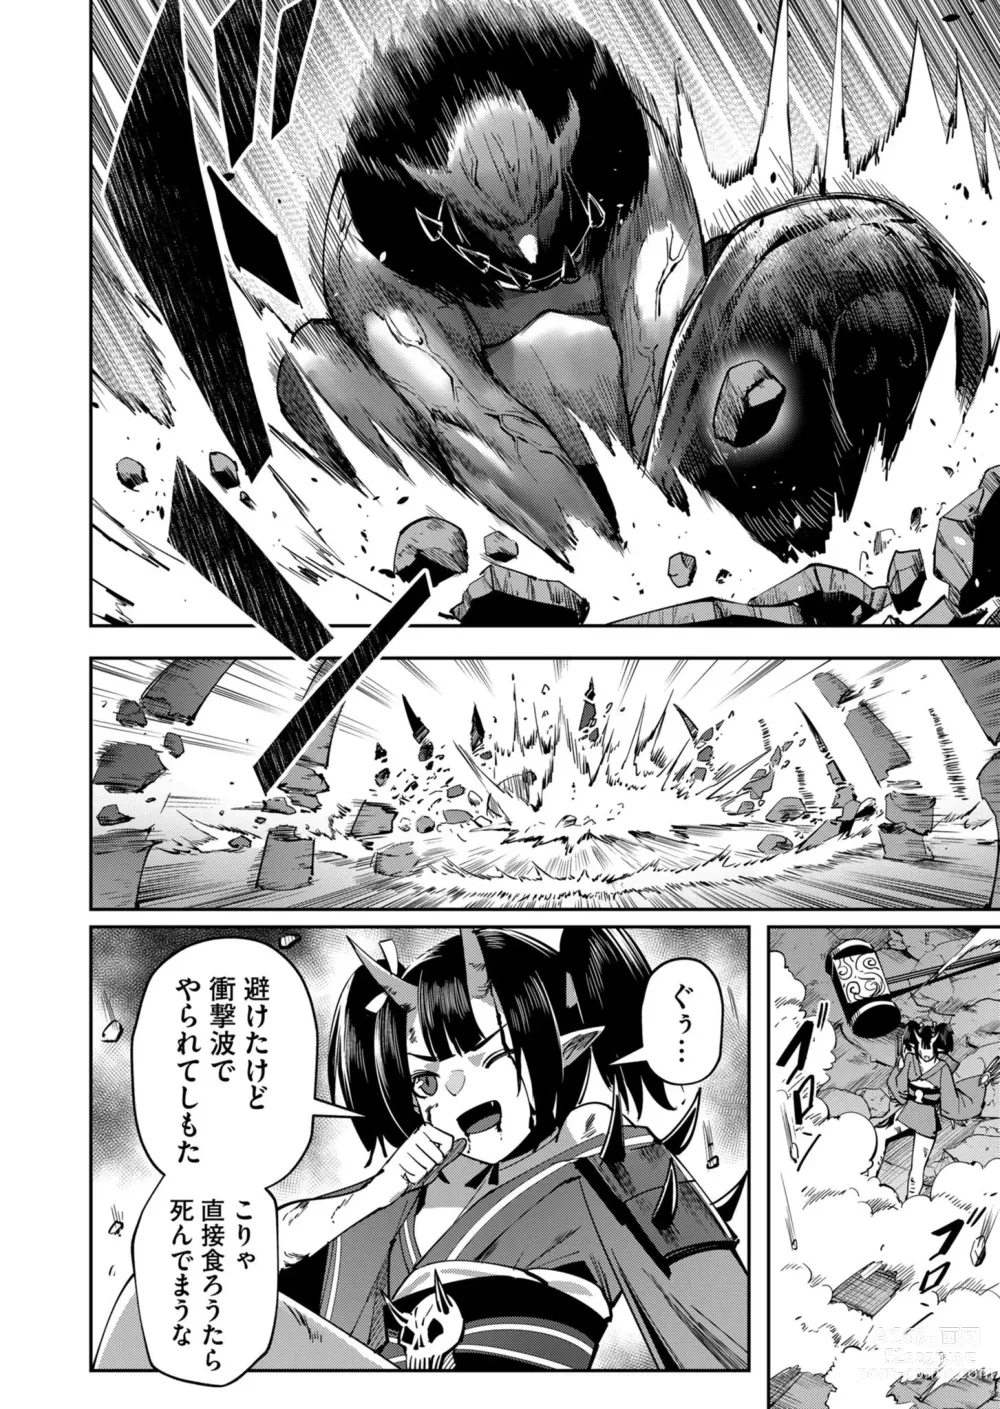 Page 152 of manga Kichiku Eiyuu Vol.03